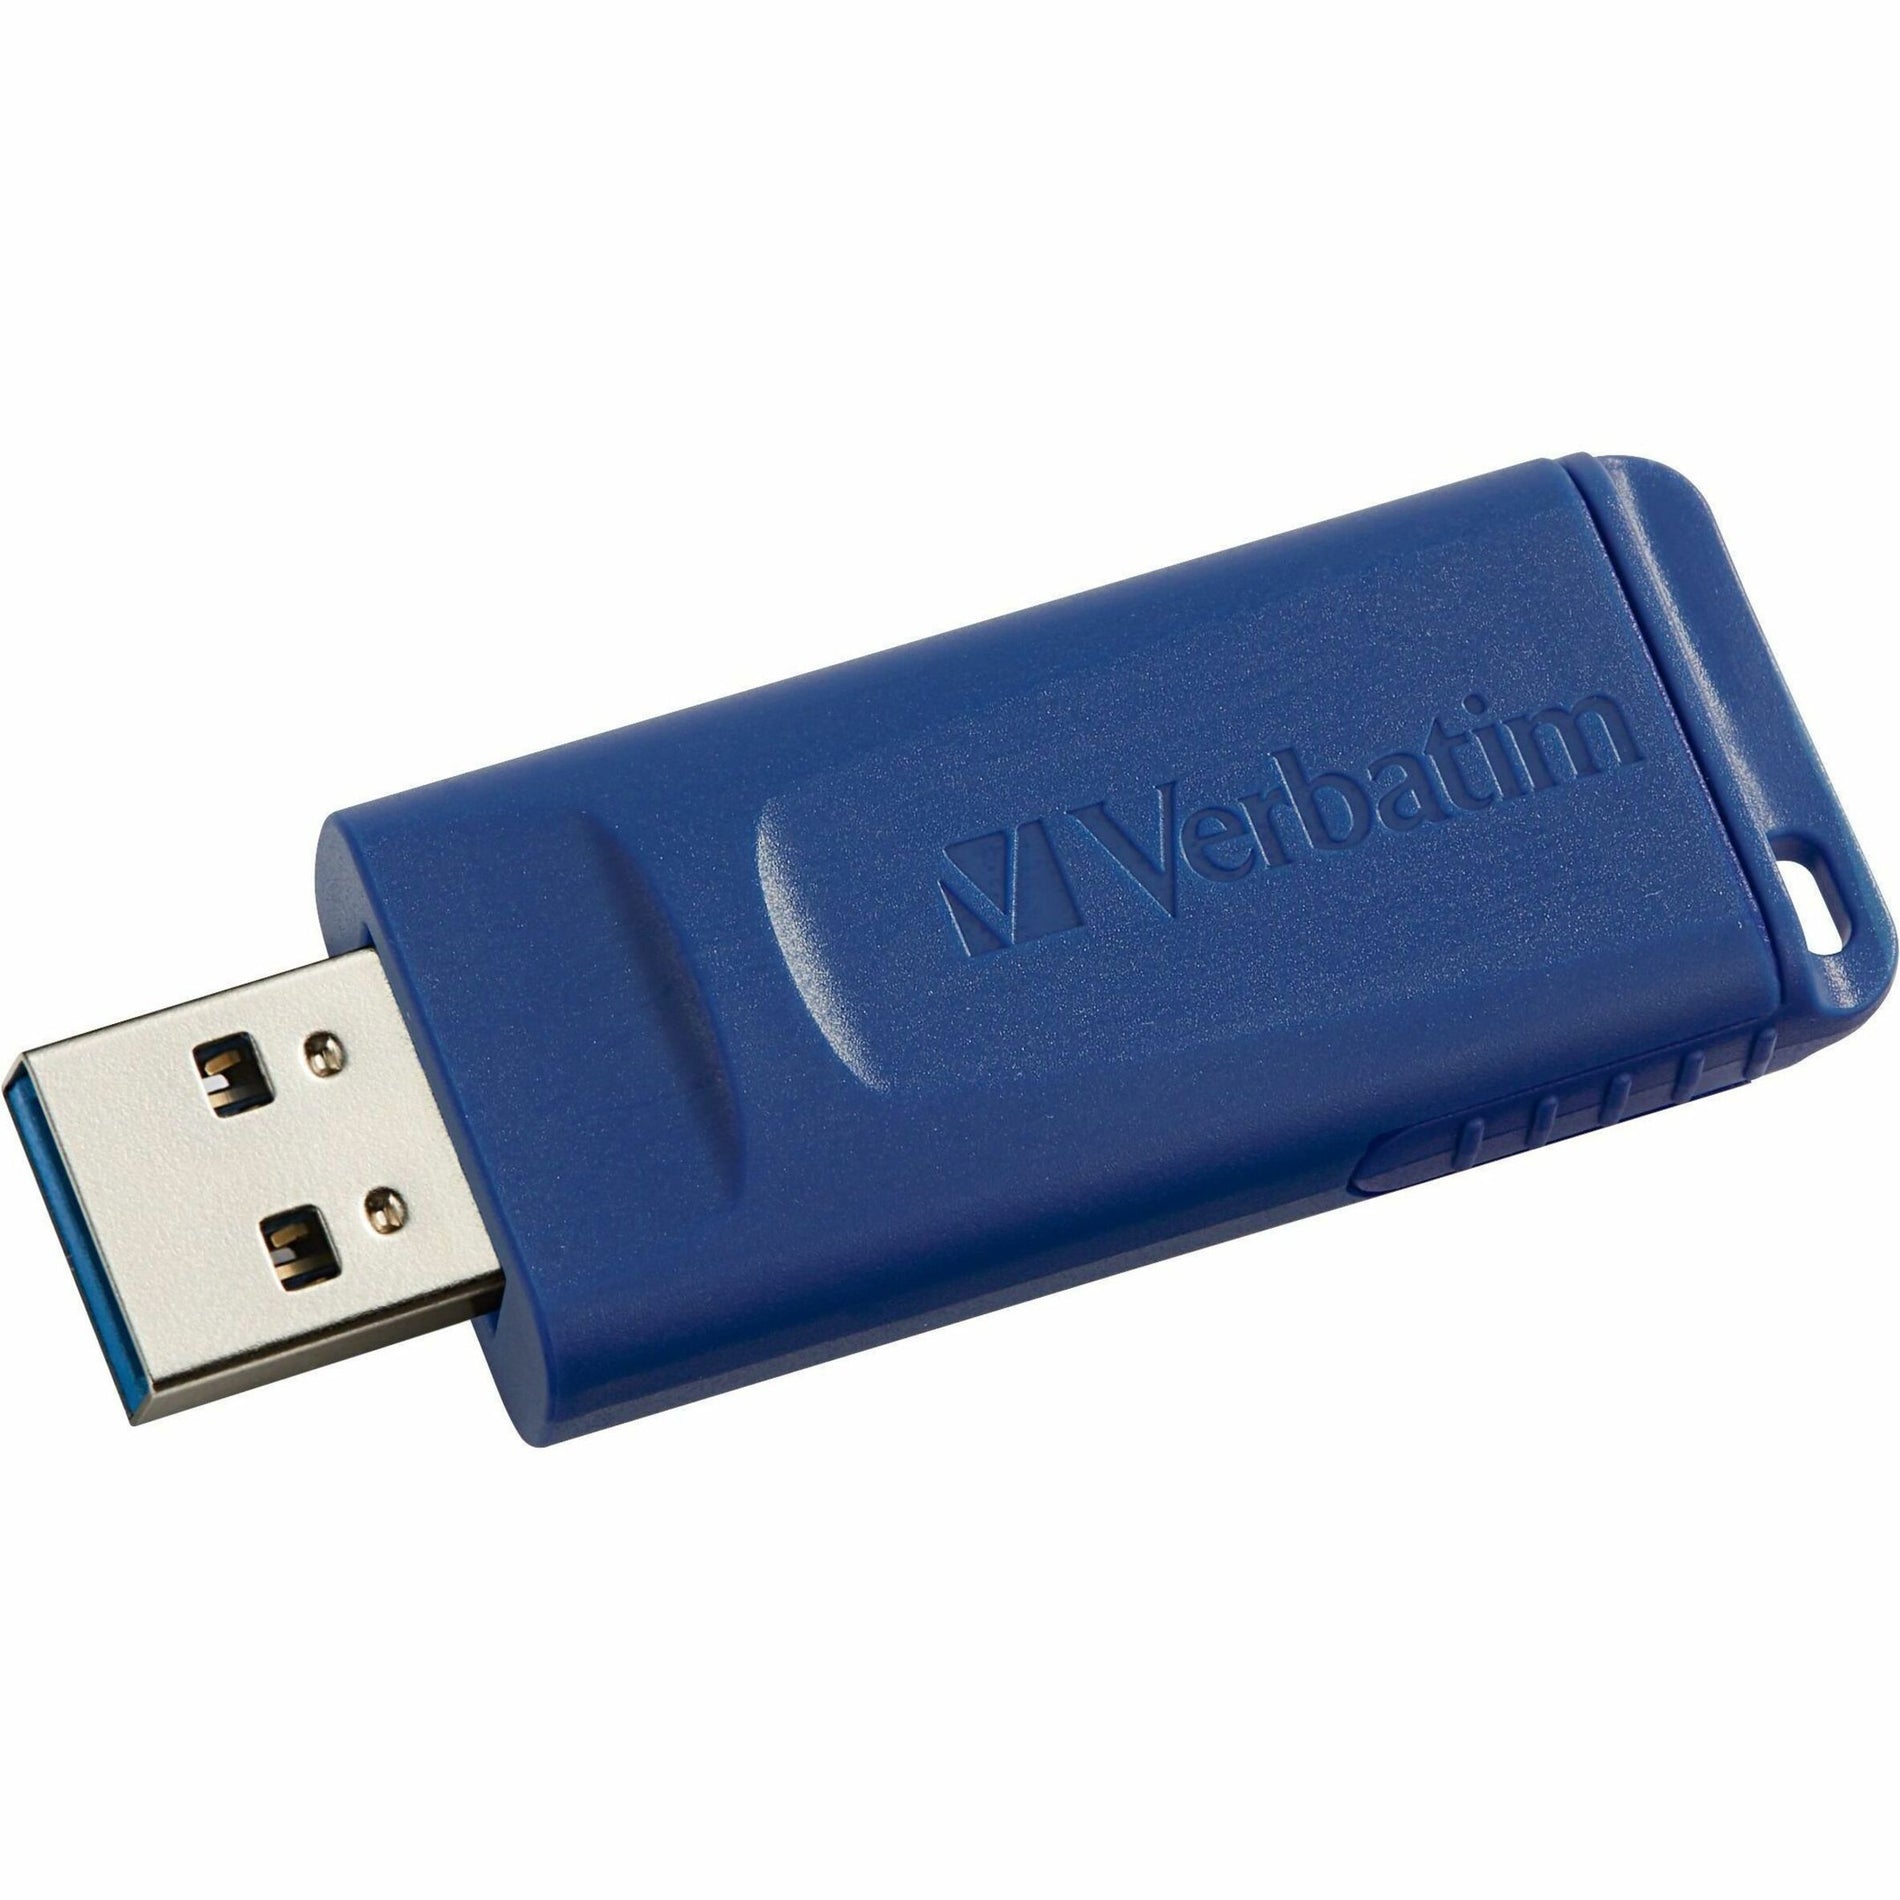 Microban 98658 64GB USB Flash Drive - Blue, Antimicrobial, Retractable, Capless